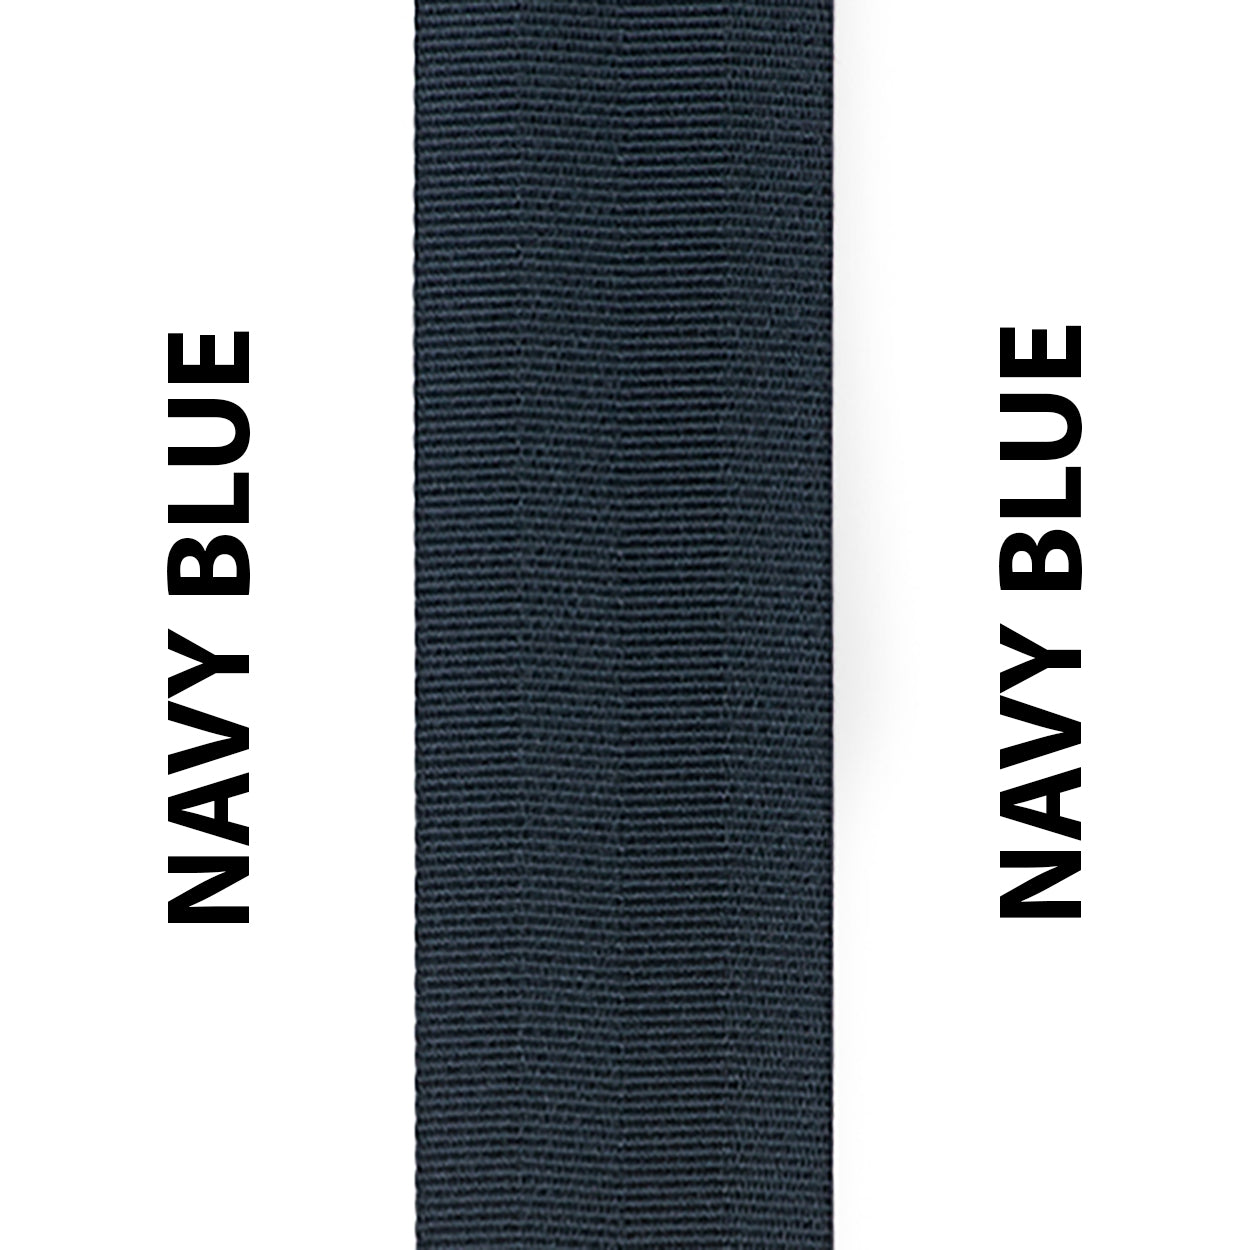 Navy Blue Seat Belt Webbing Replacement Strap